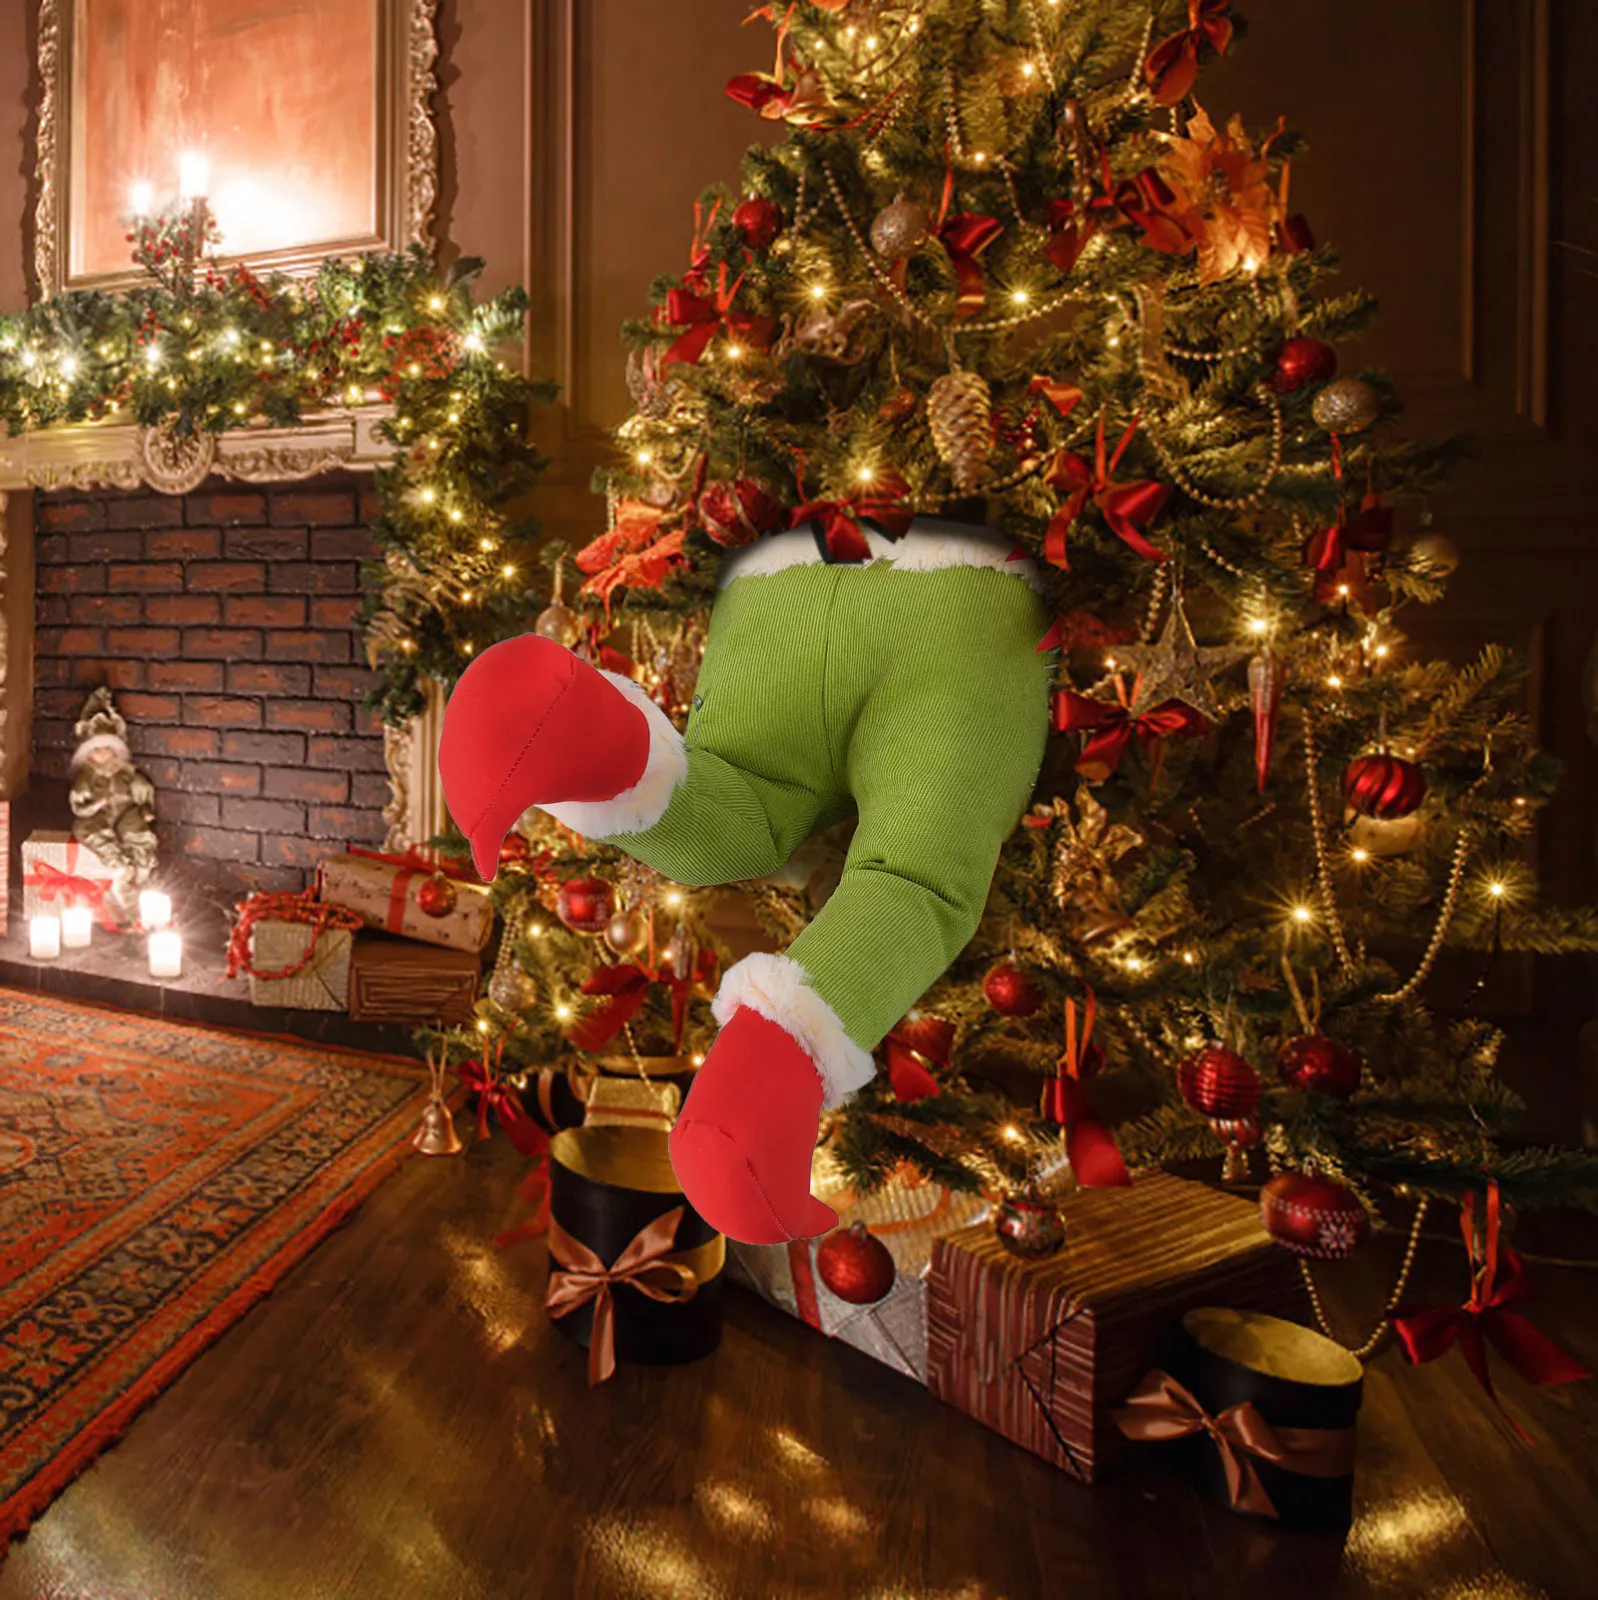 Christmas Decor 15.7 Plush Legs for Christmas Decorations Stuffed Legs for Christmas Tree Home Party Wreaths Decor A